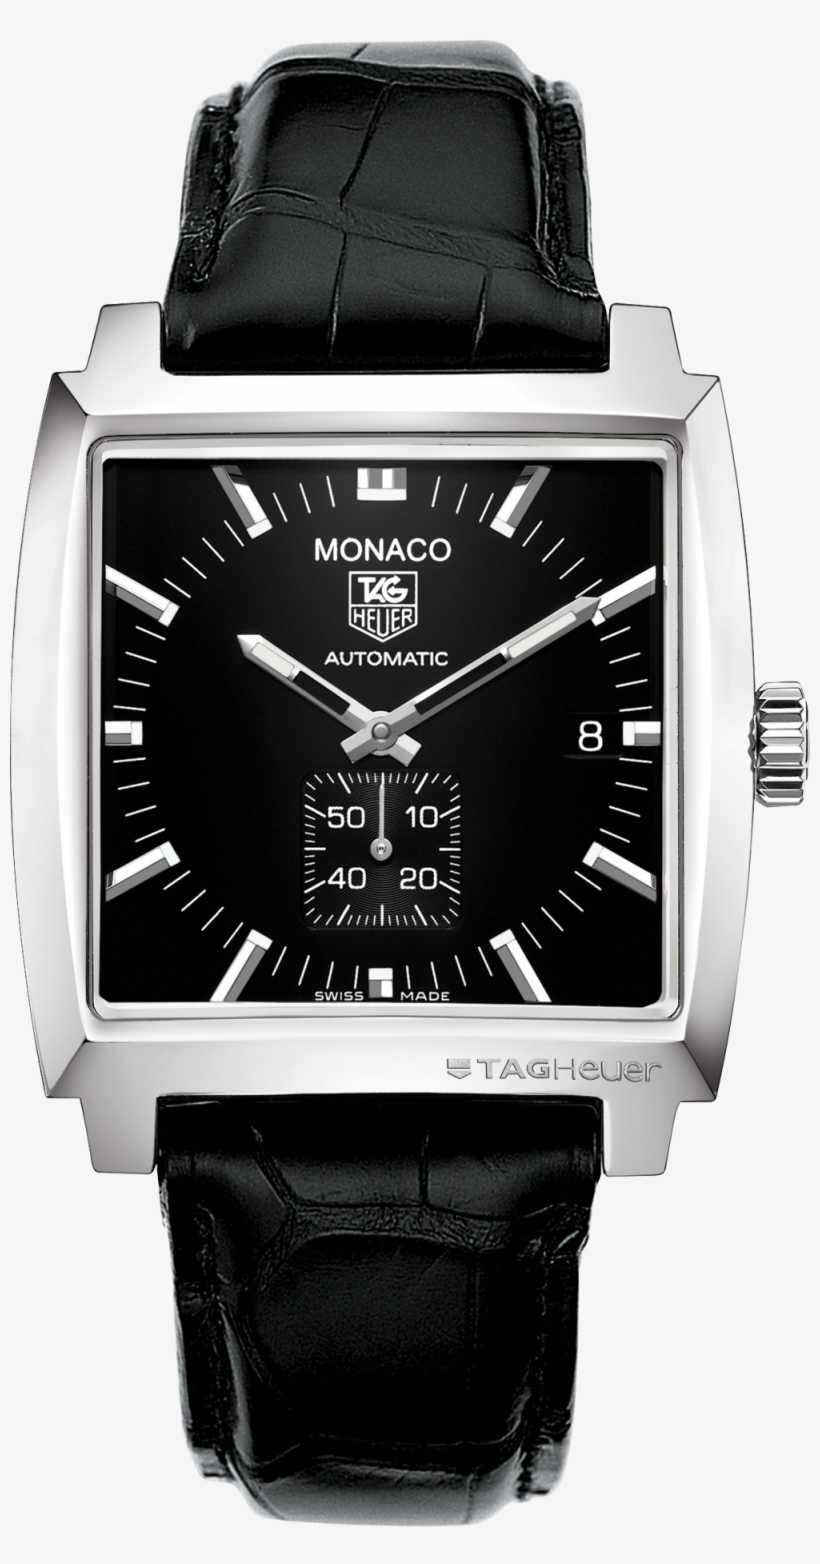 Tag Heuer Monaco Calibre 6 Automatic Watch 37mm - Tag Heuer Monaco Automatic Watch, transparent png #3060740